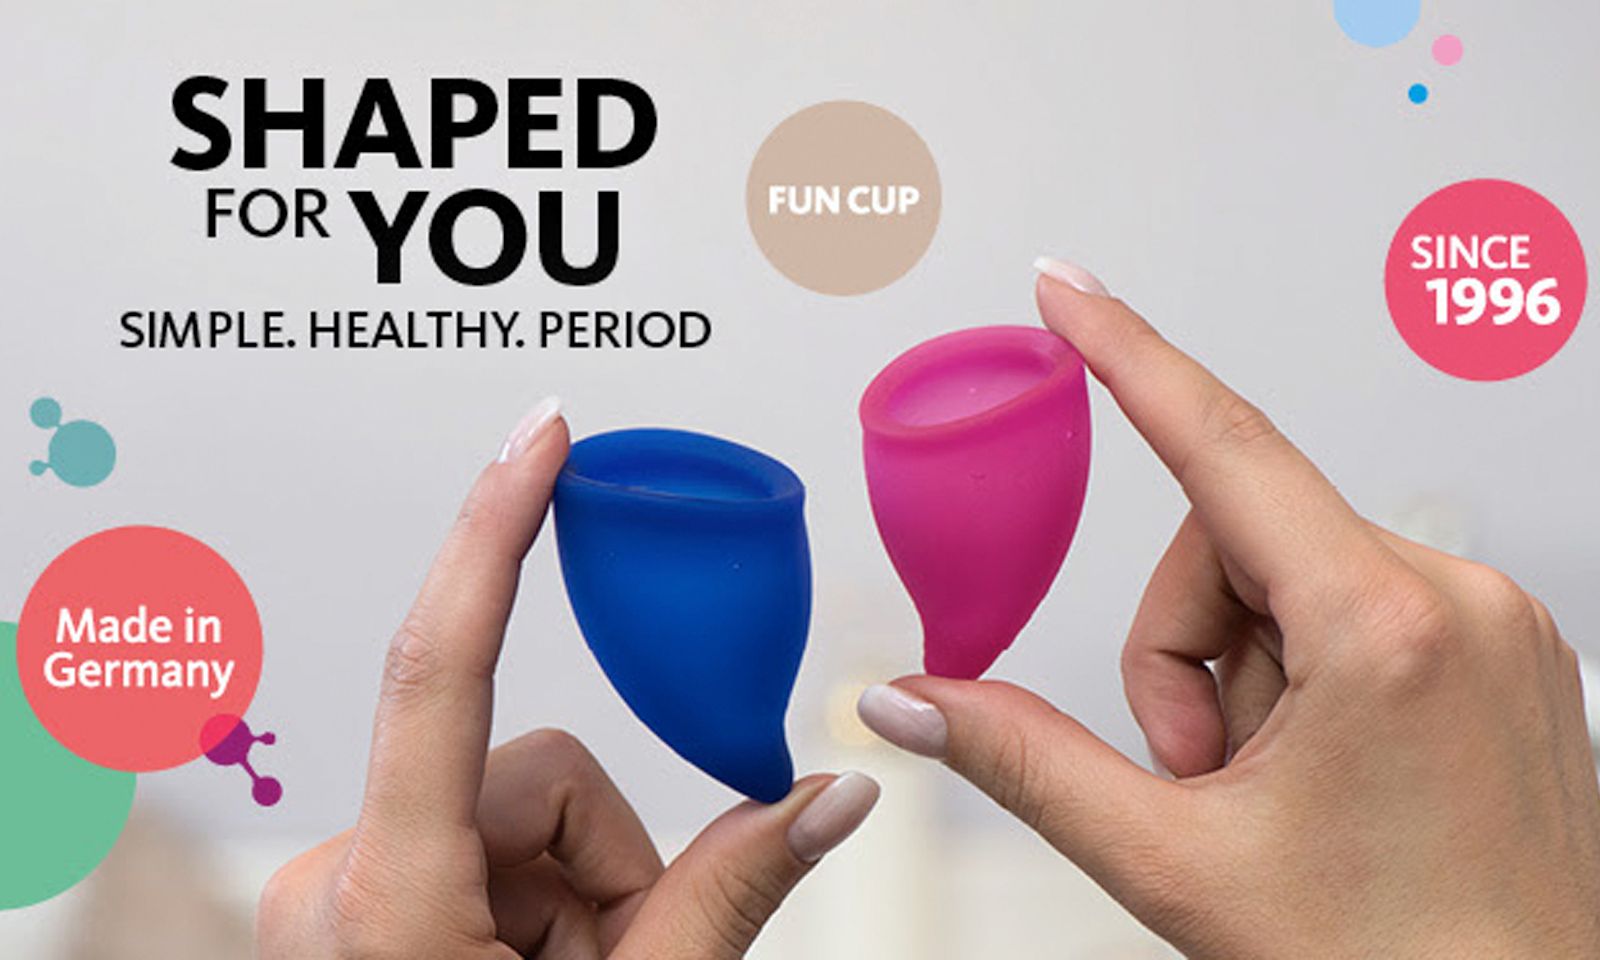 Fun Factory Debuts Fun Cup Menstrual Cup